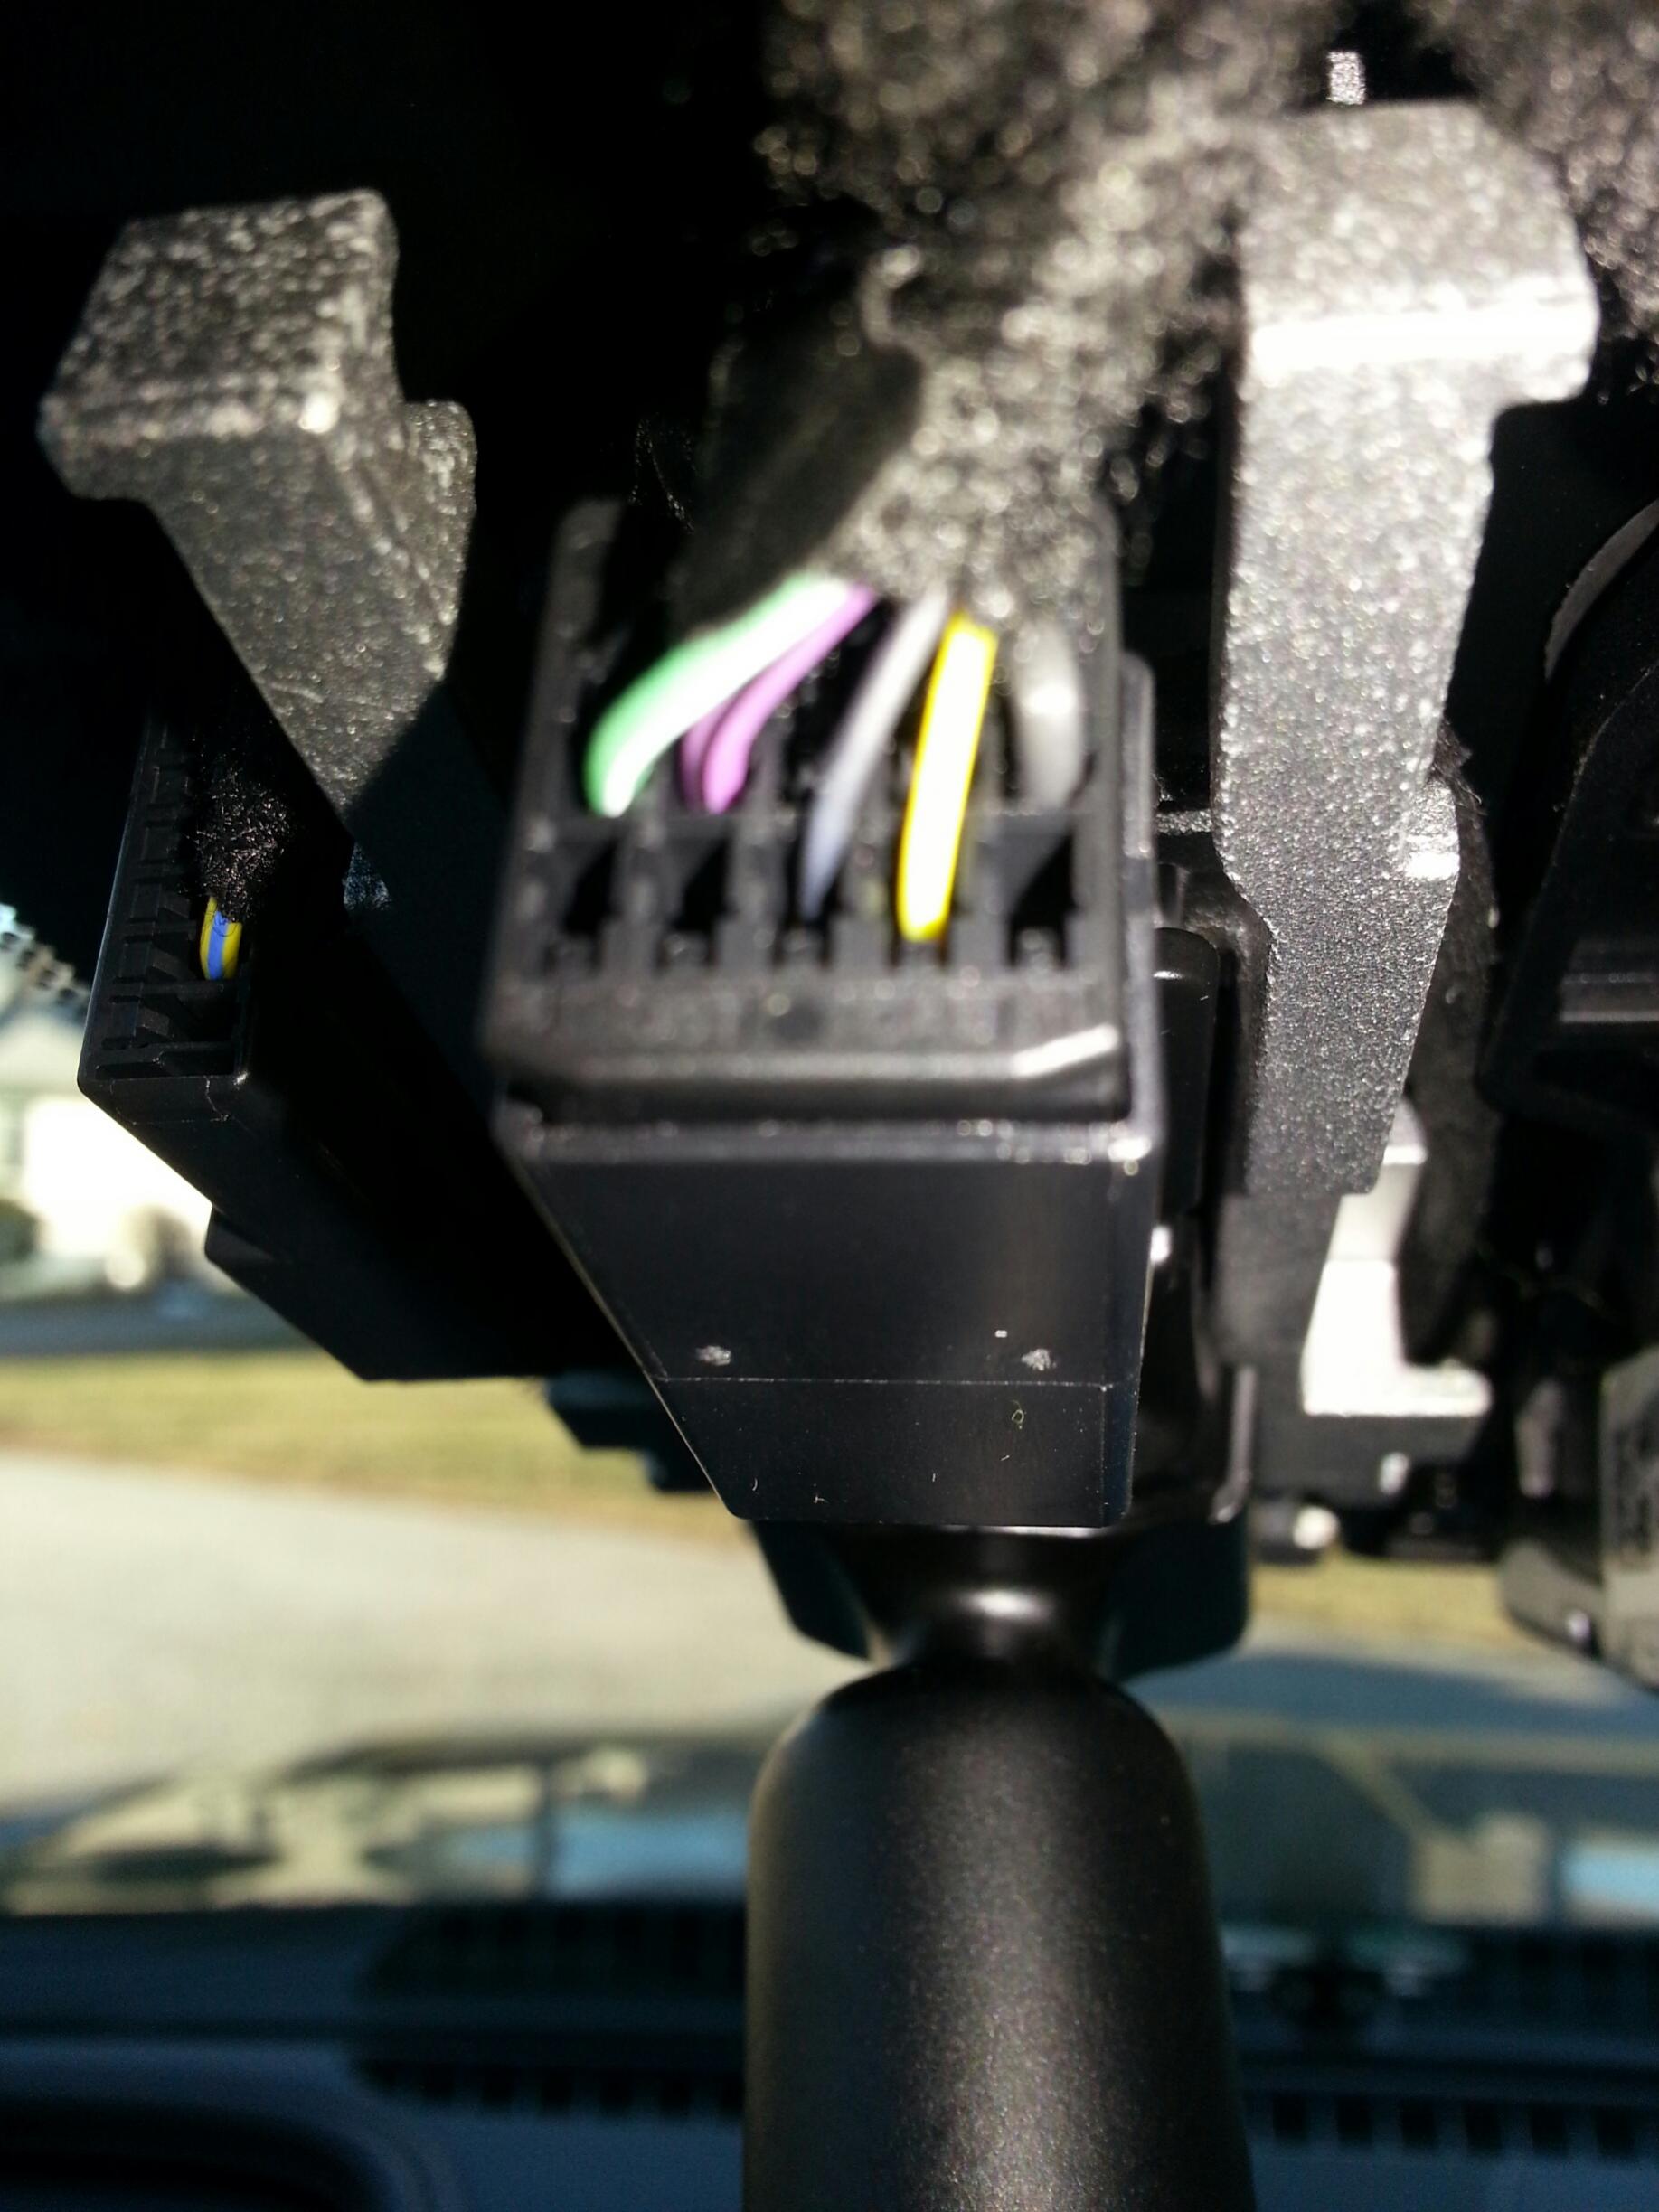 2014 Impala LTZ Mirror Tap/ Blend Mount for Radar Detector ... 2000 chevy avalanche fuse box diagram 